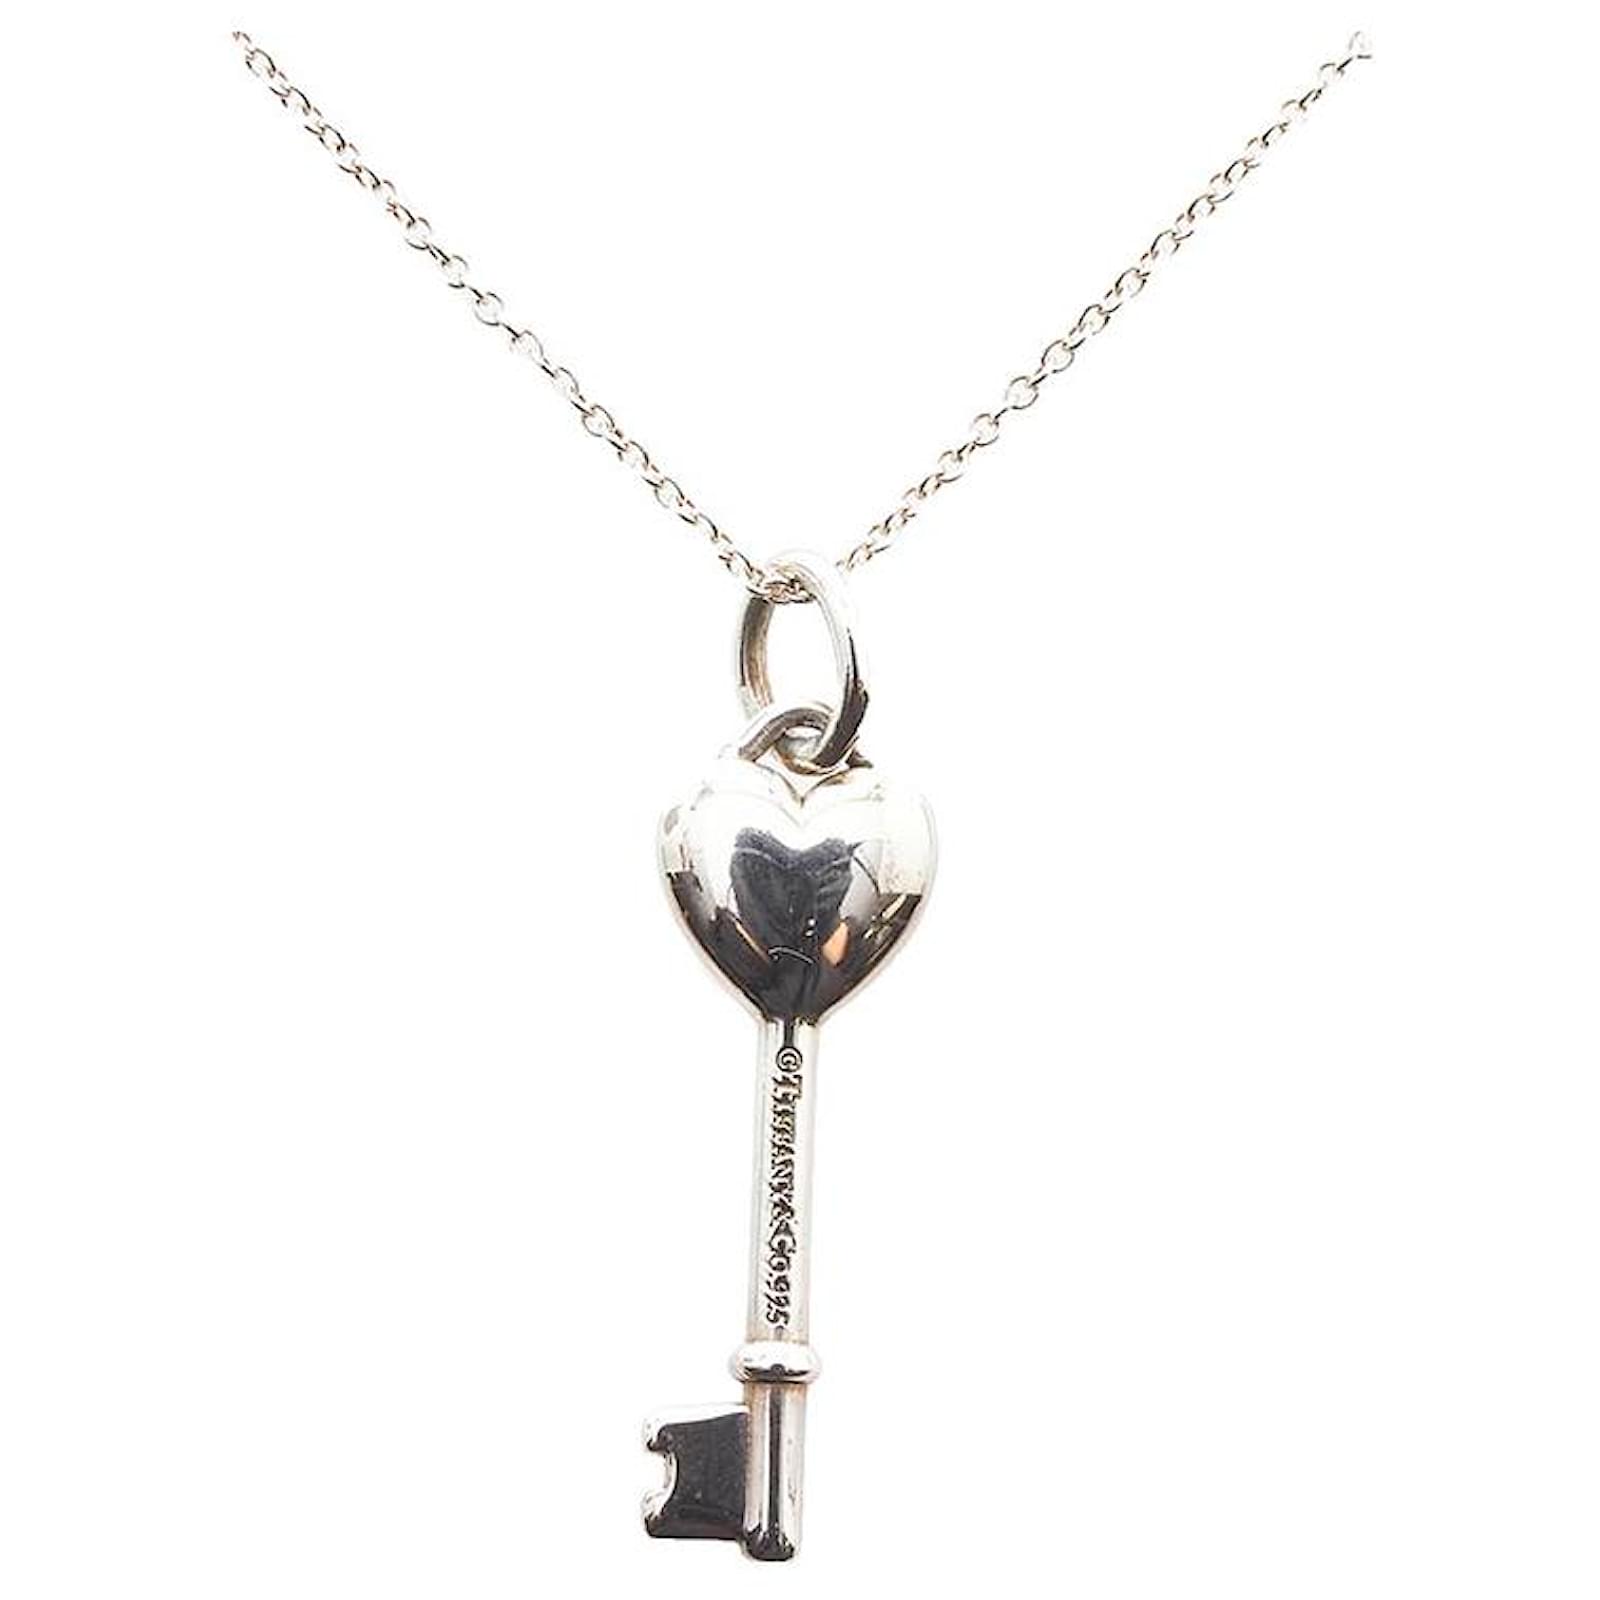 Tiffany & Co. Sterling Silver Tiffany Key Pendant Necklace